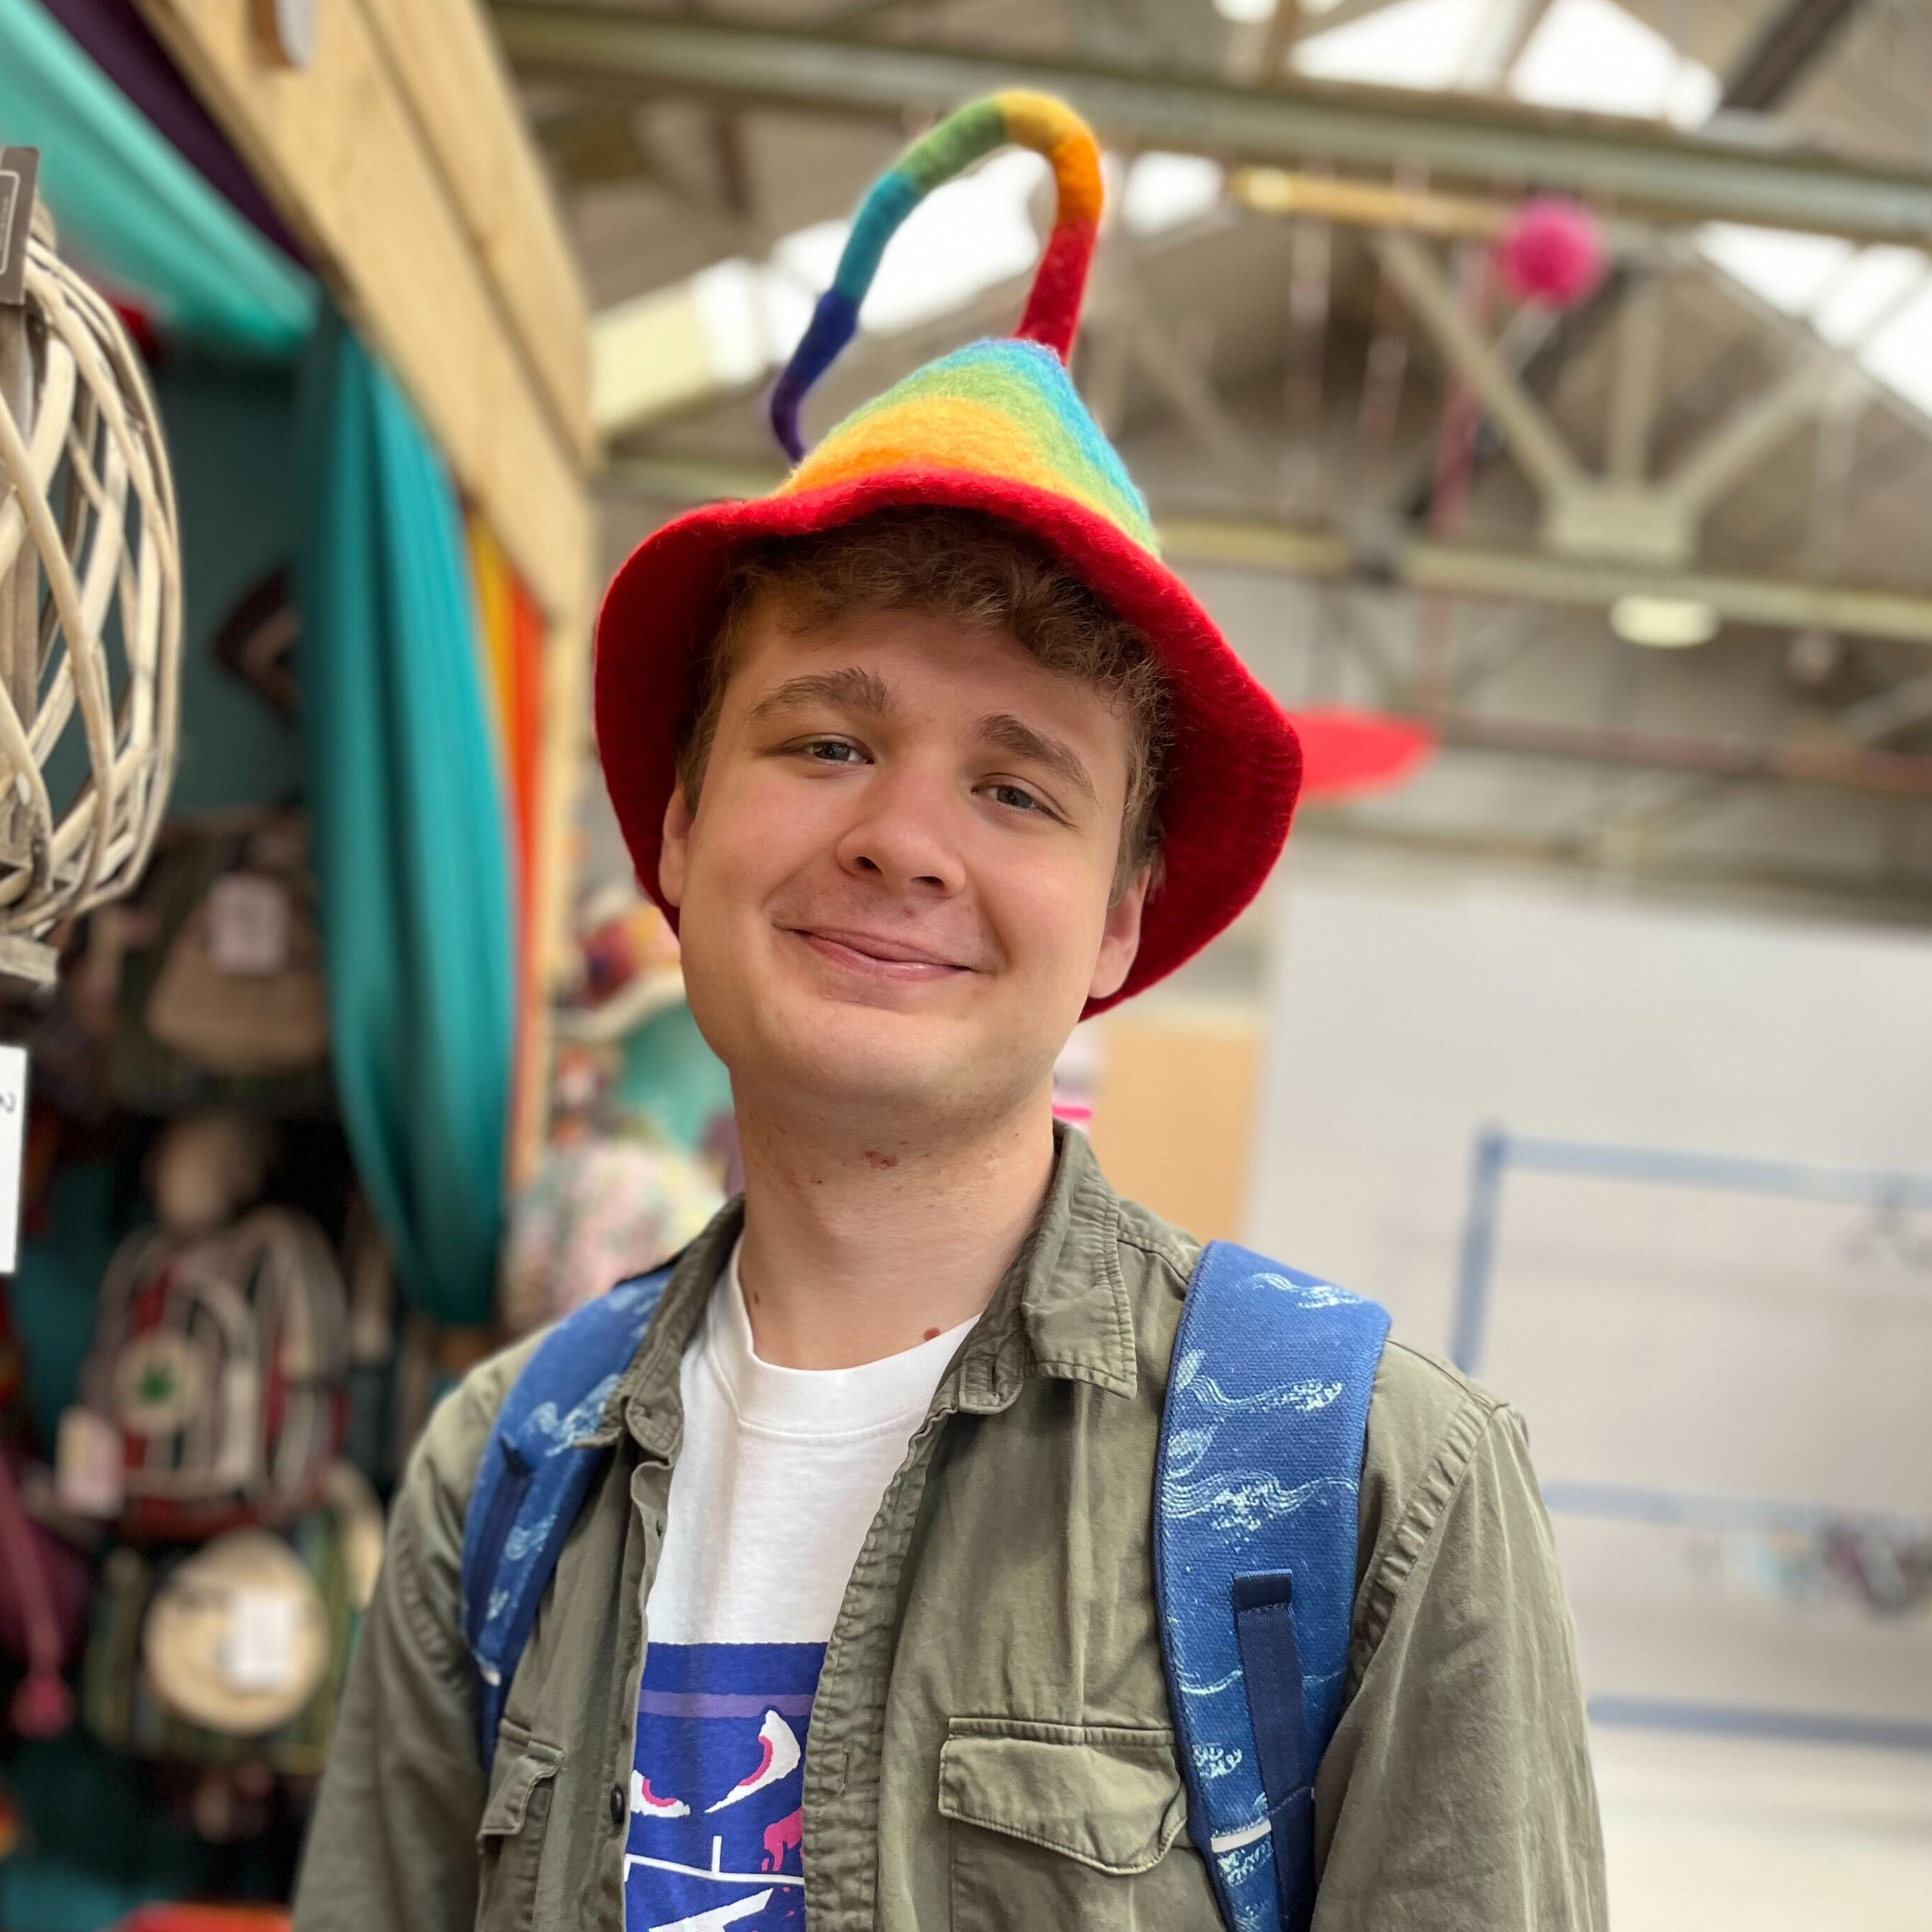 TechRadar author Dashiell Wood wearing a whimsical hat.